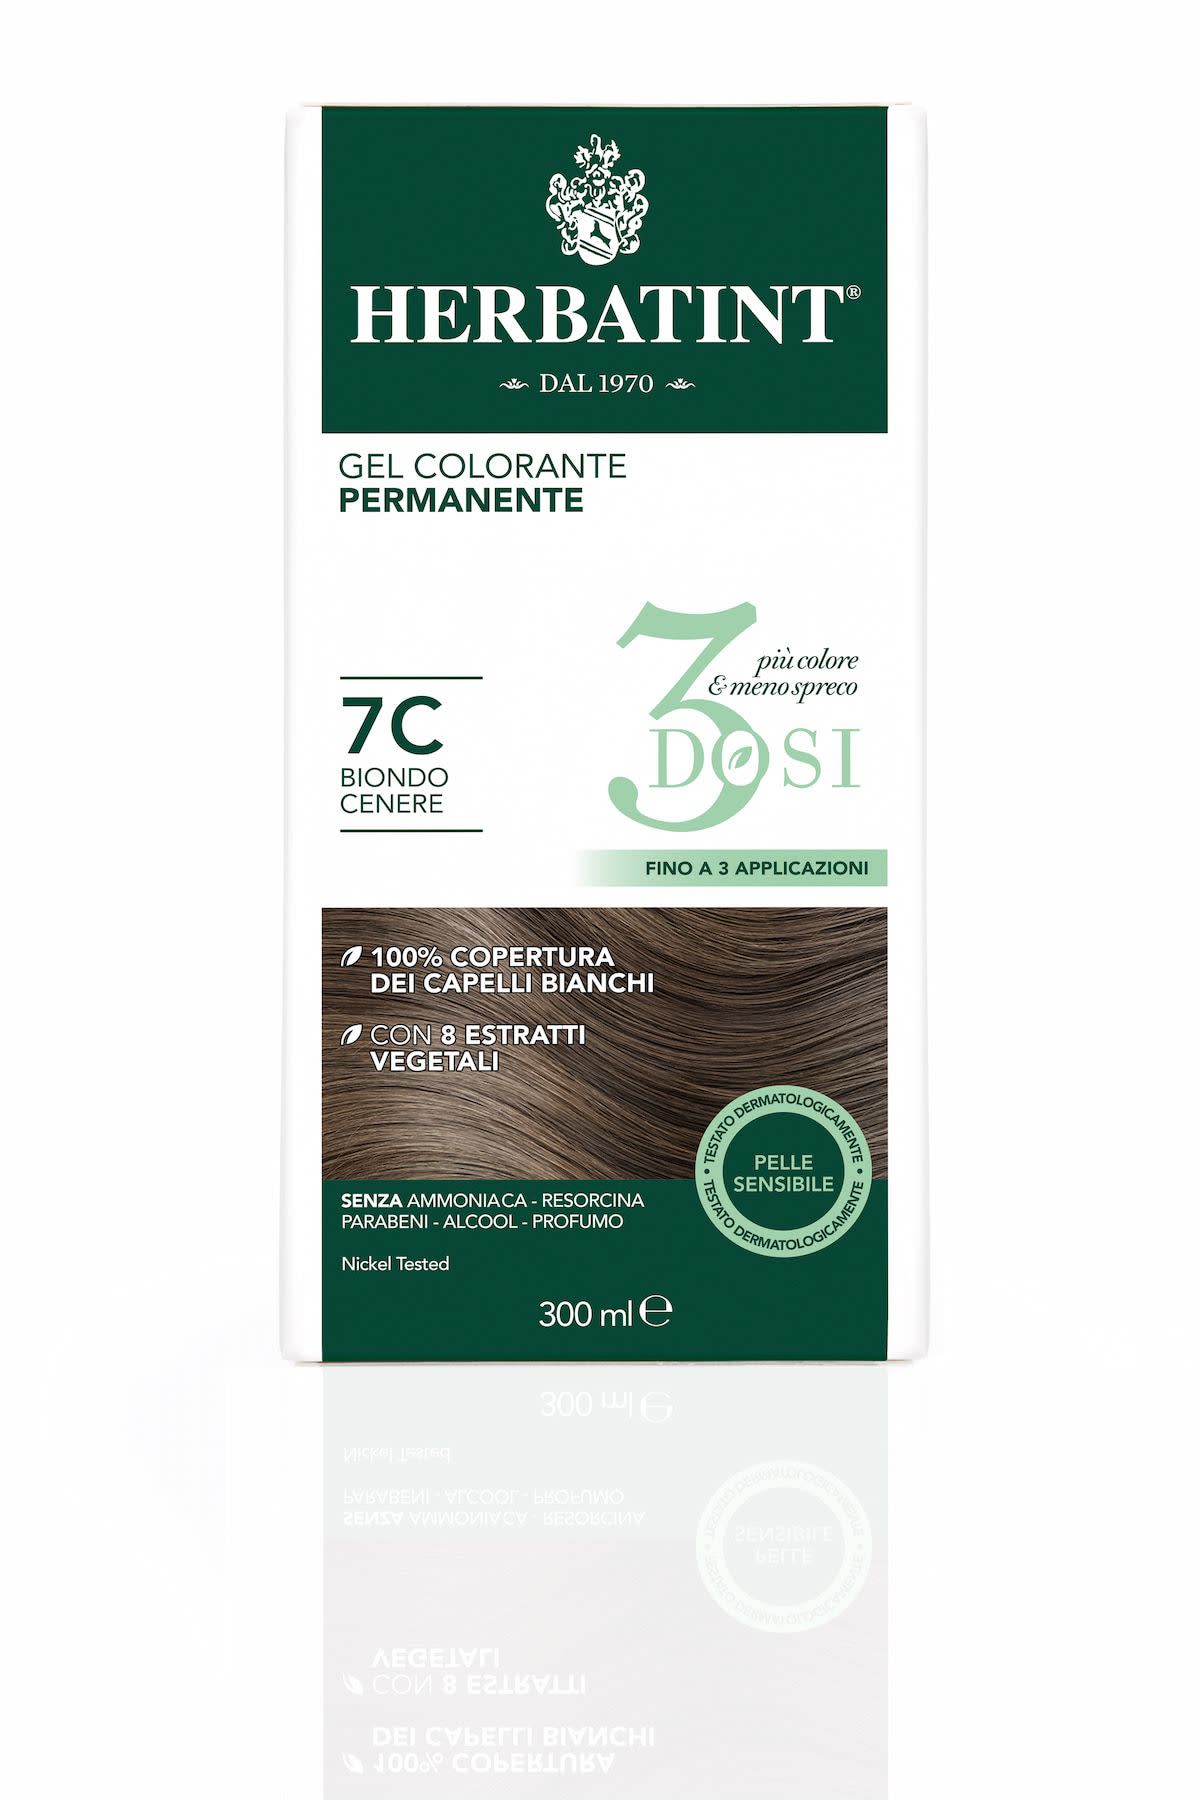 975906886 - Herbatint Gel colorante permanente 3 dosi 7C biondo cenere 300ml - 4732929_3.jpg